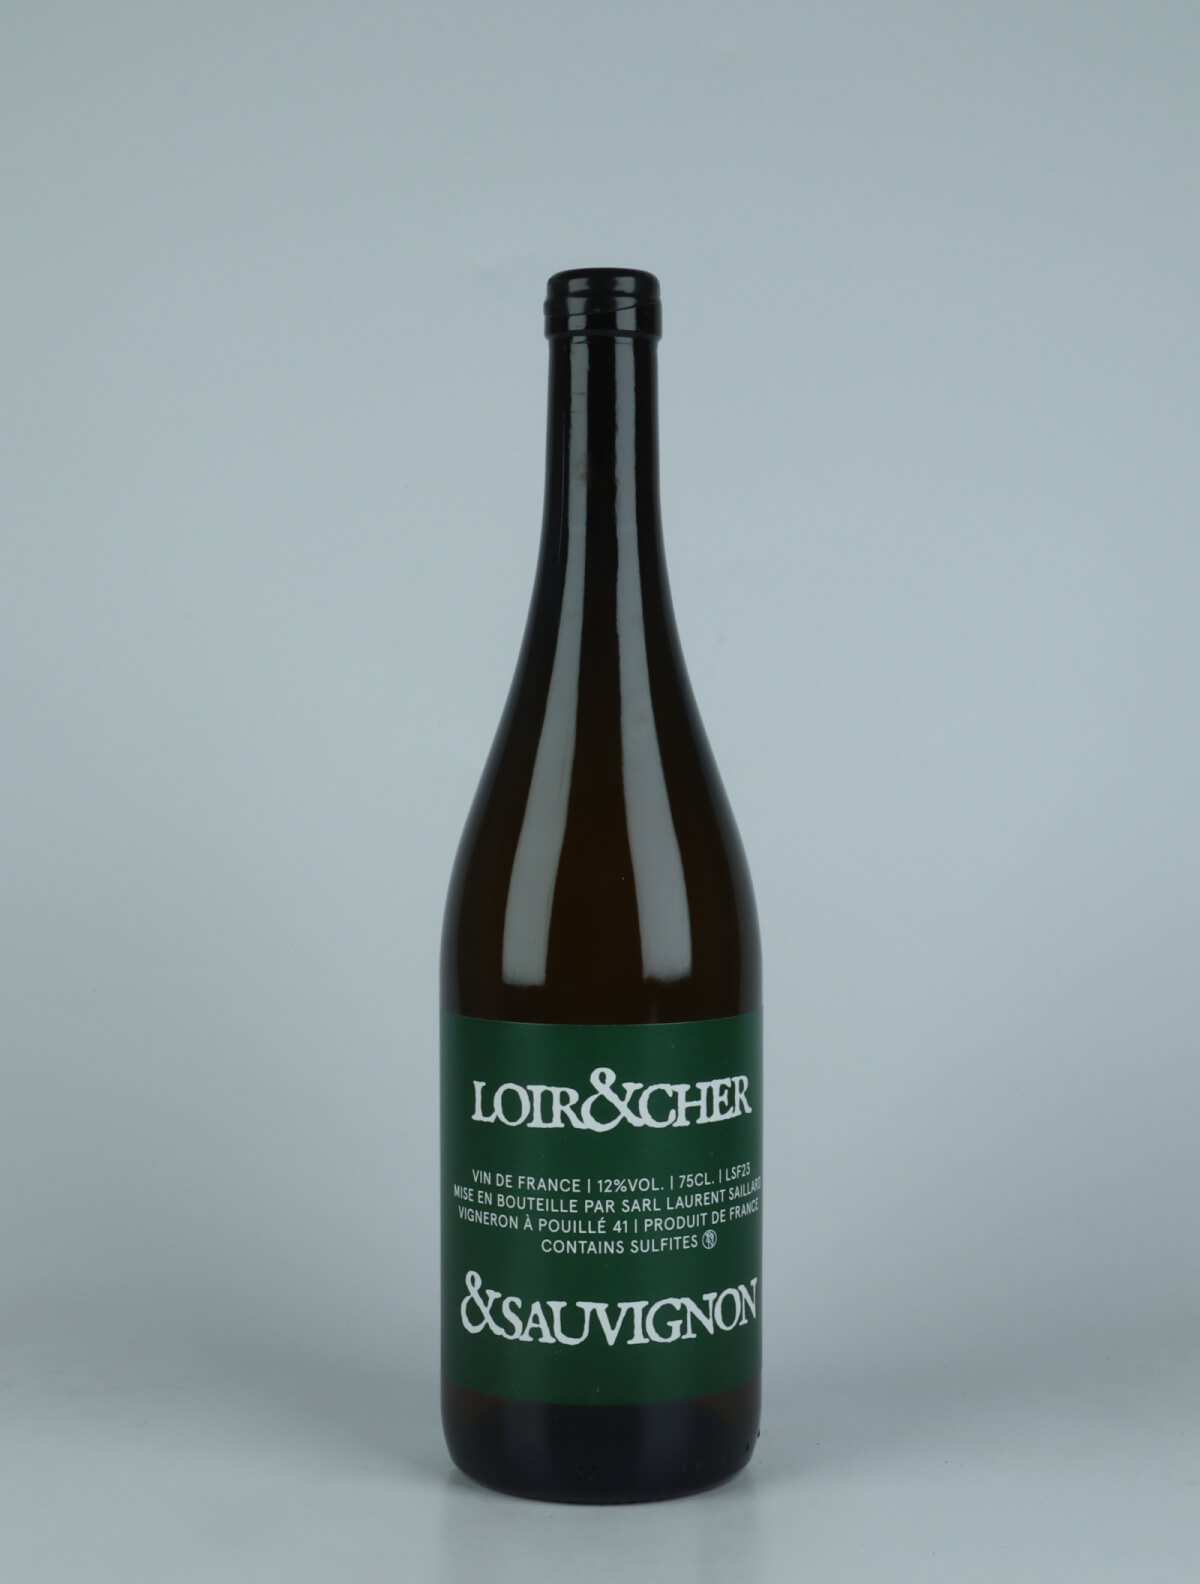 A bottle 2023 Sauvignon du Loir & Cher White wine from Laurent Saillard, Loire in France